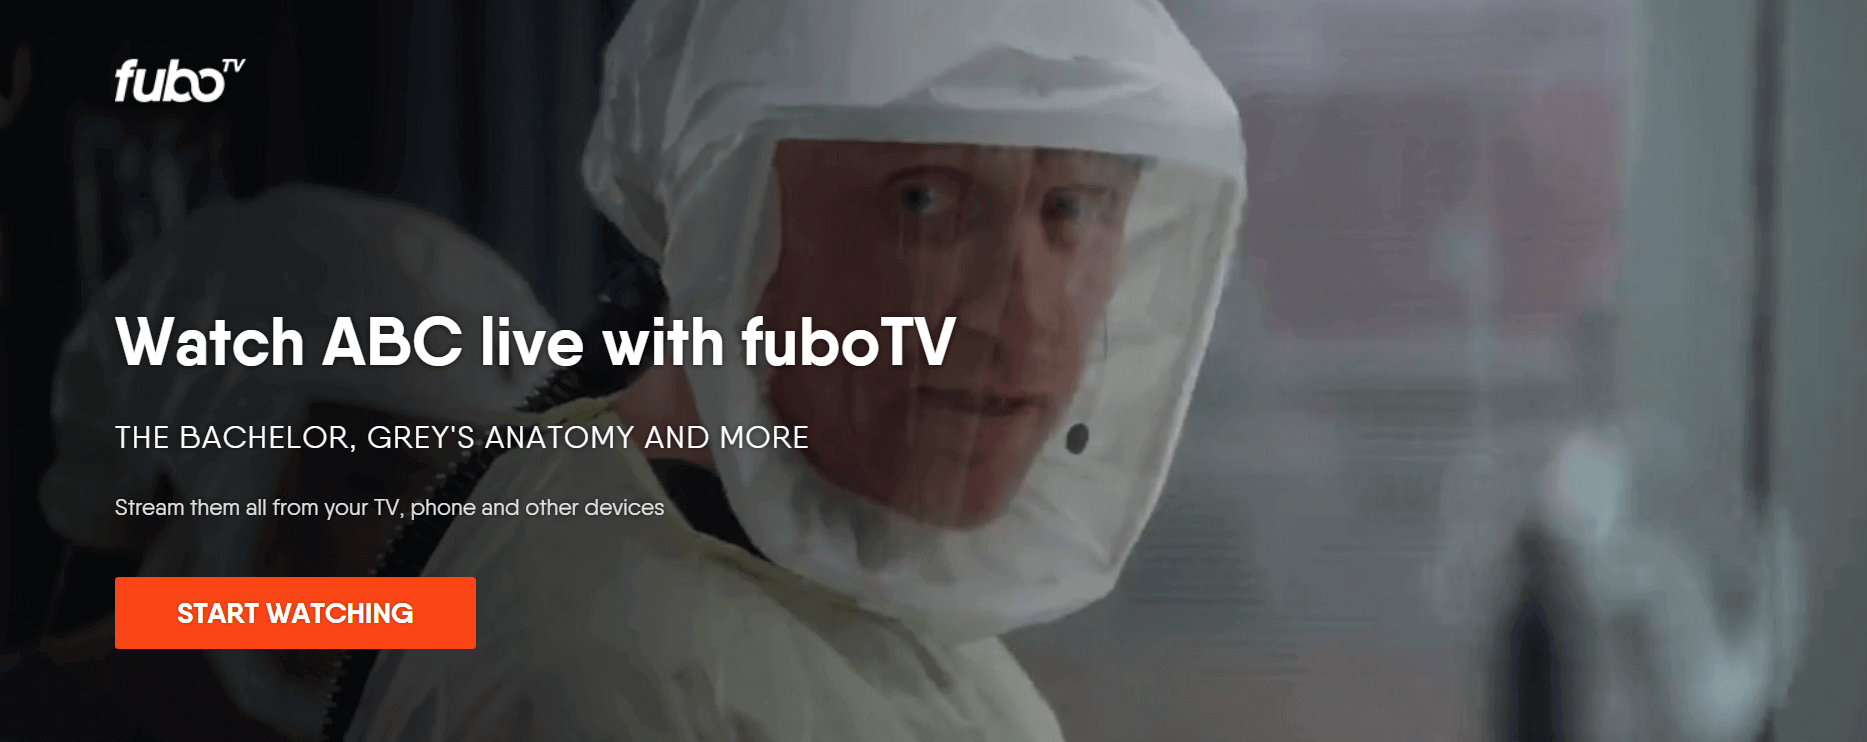  abc-kostenlose-testversion-fubo-tv 